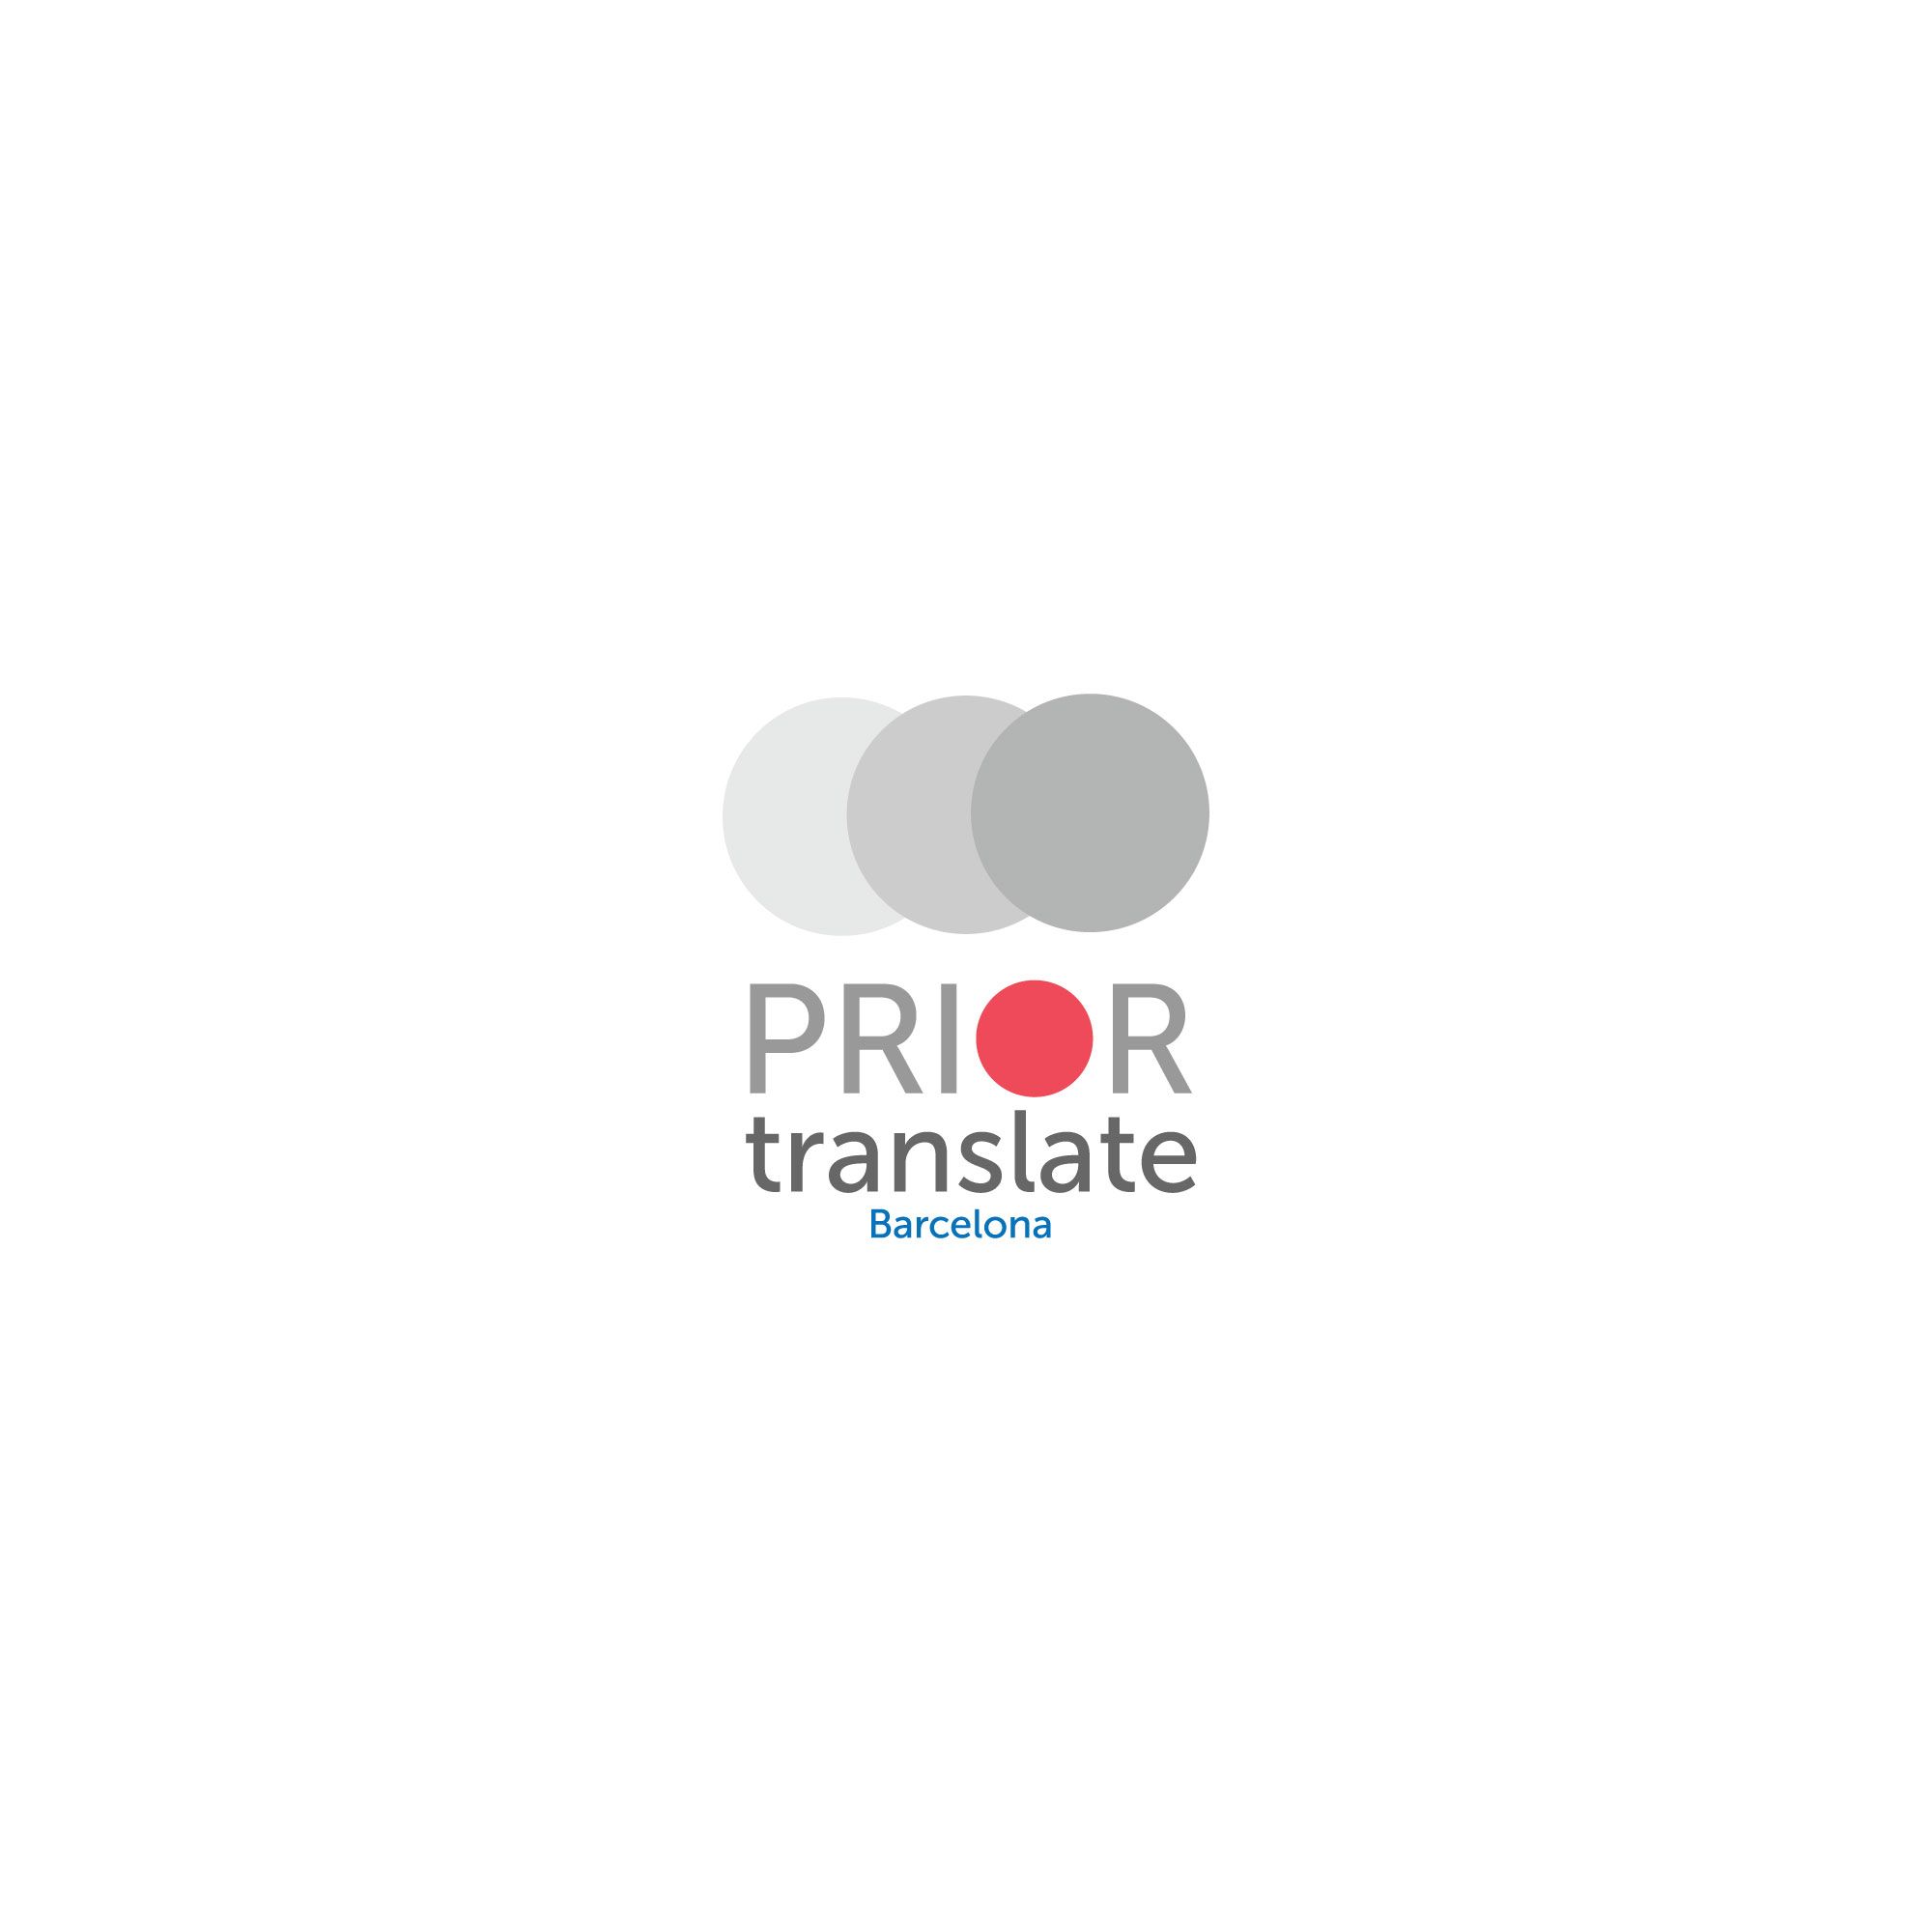 Логотип для PRIOR translate - дизайнер oparin1fedor